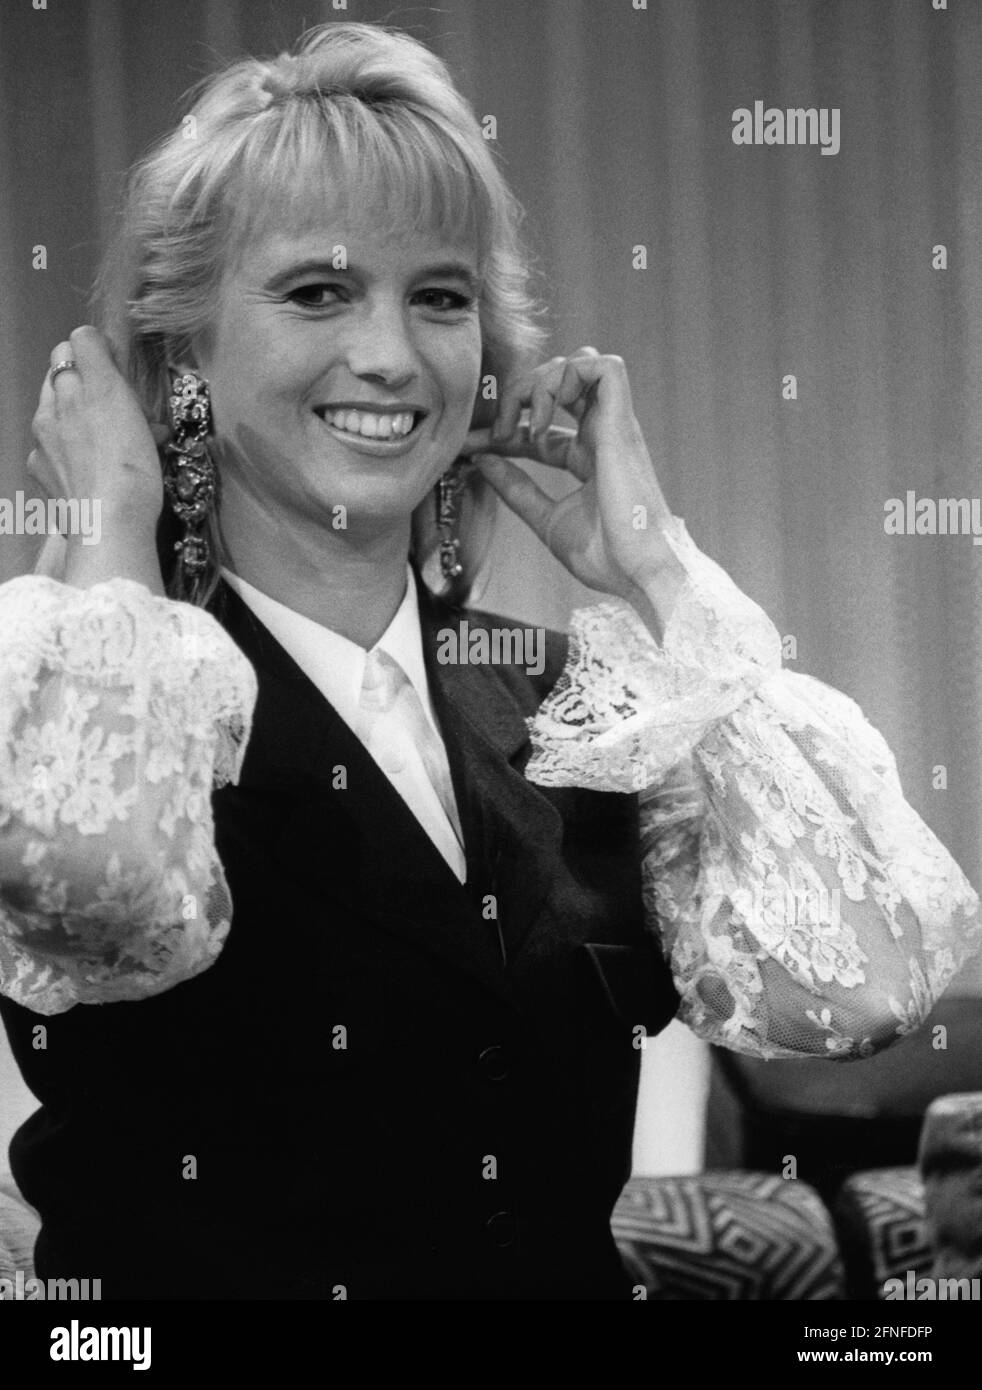 Show host Linda de Mol with earrings. [automated translation] Stock Photo